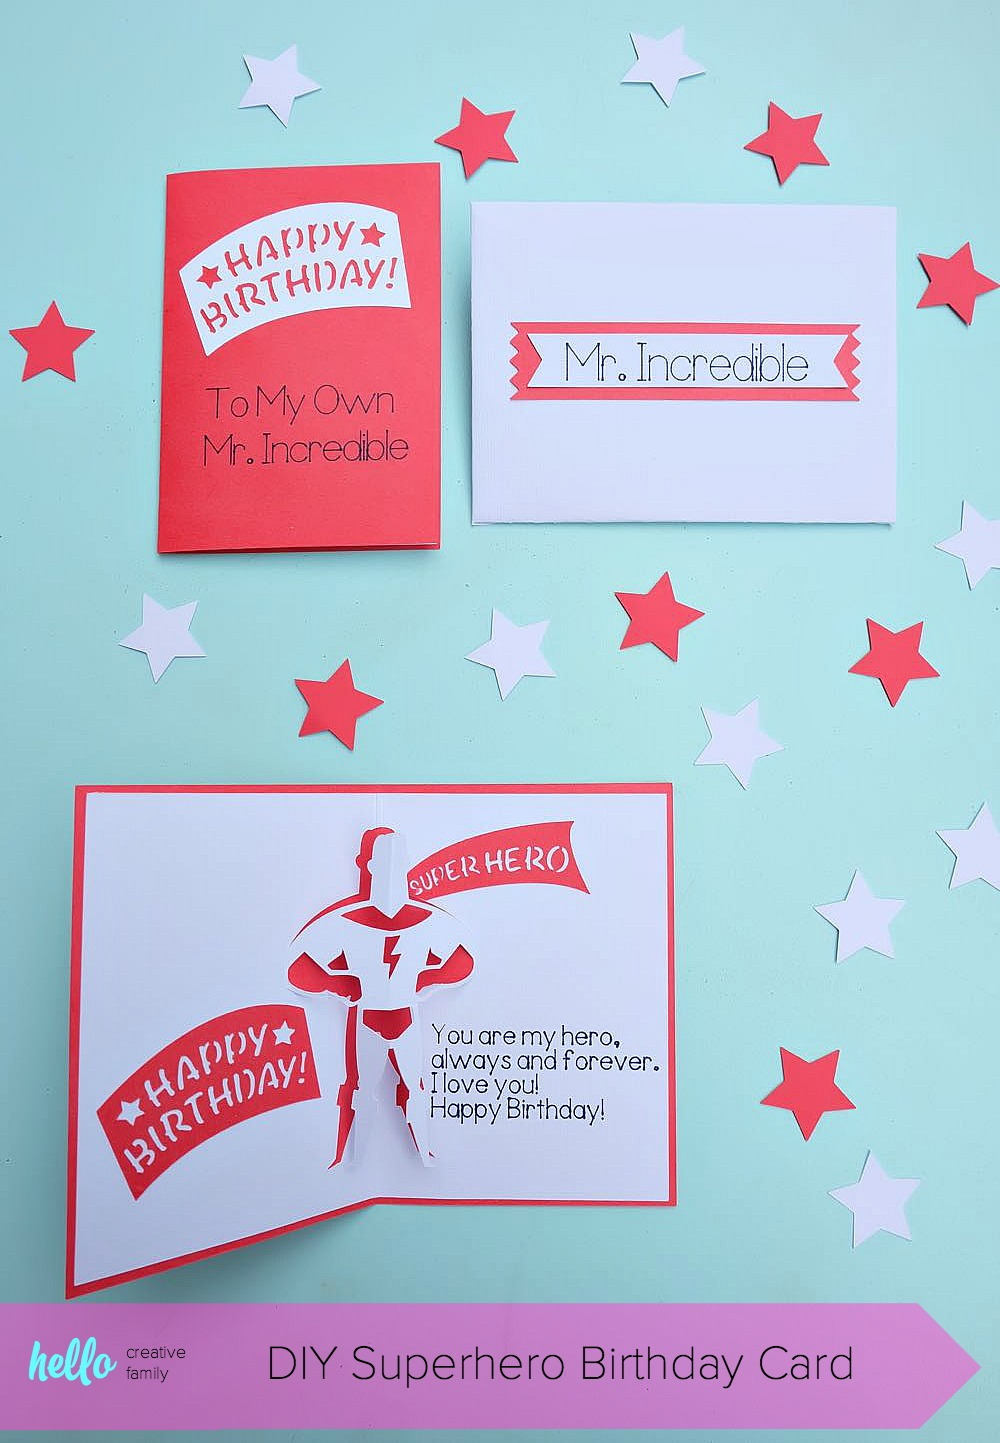 Happy Birthday Card Idea Diy Superhero Birthday Card And Envelope Set Hello Creative Family